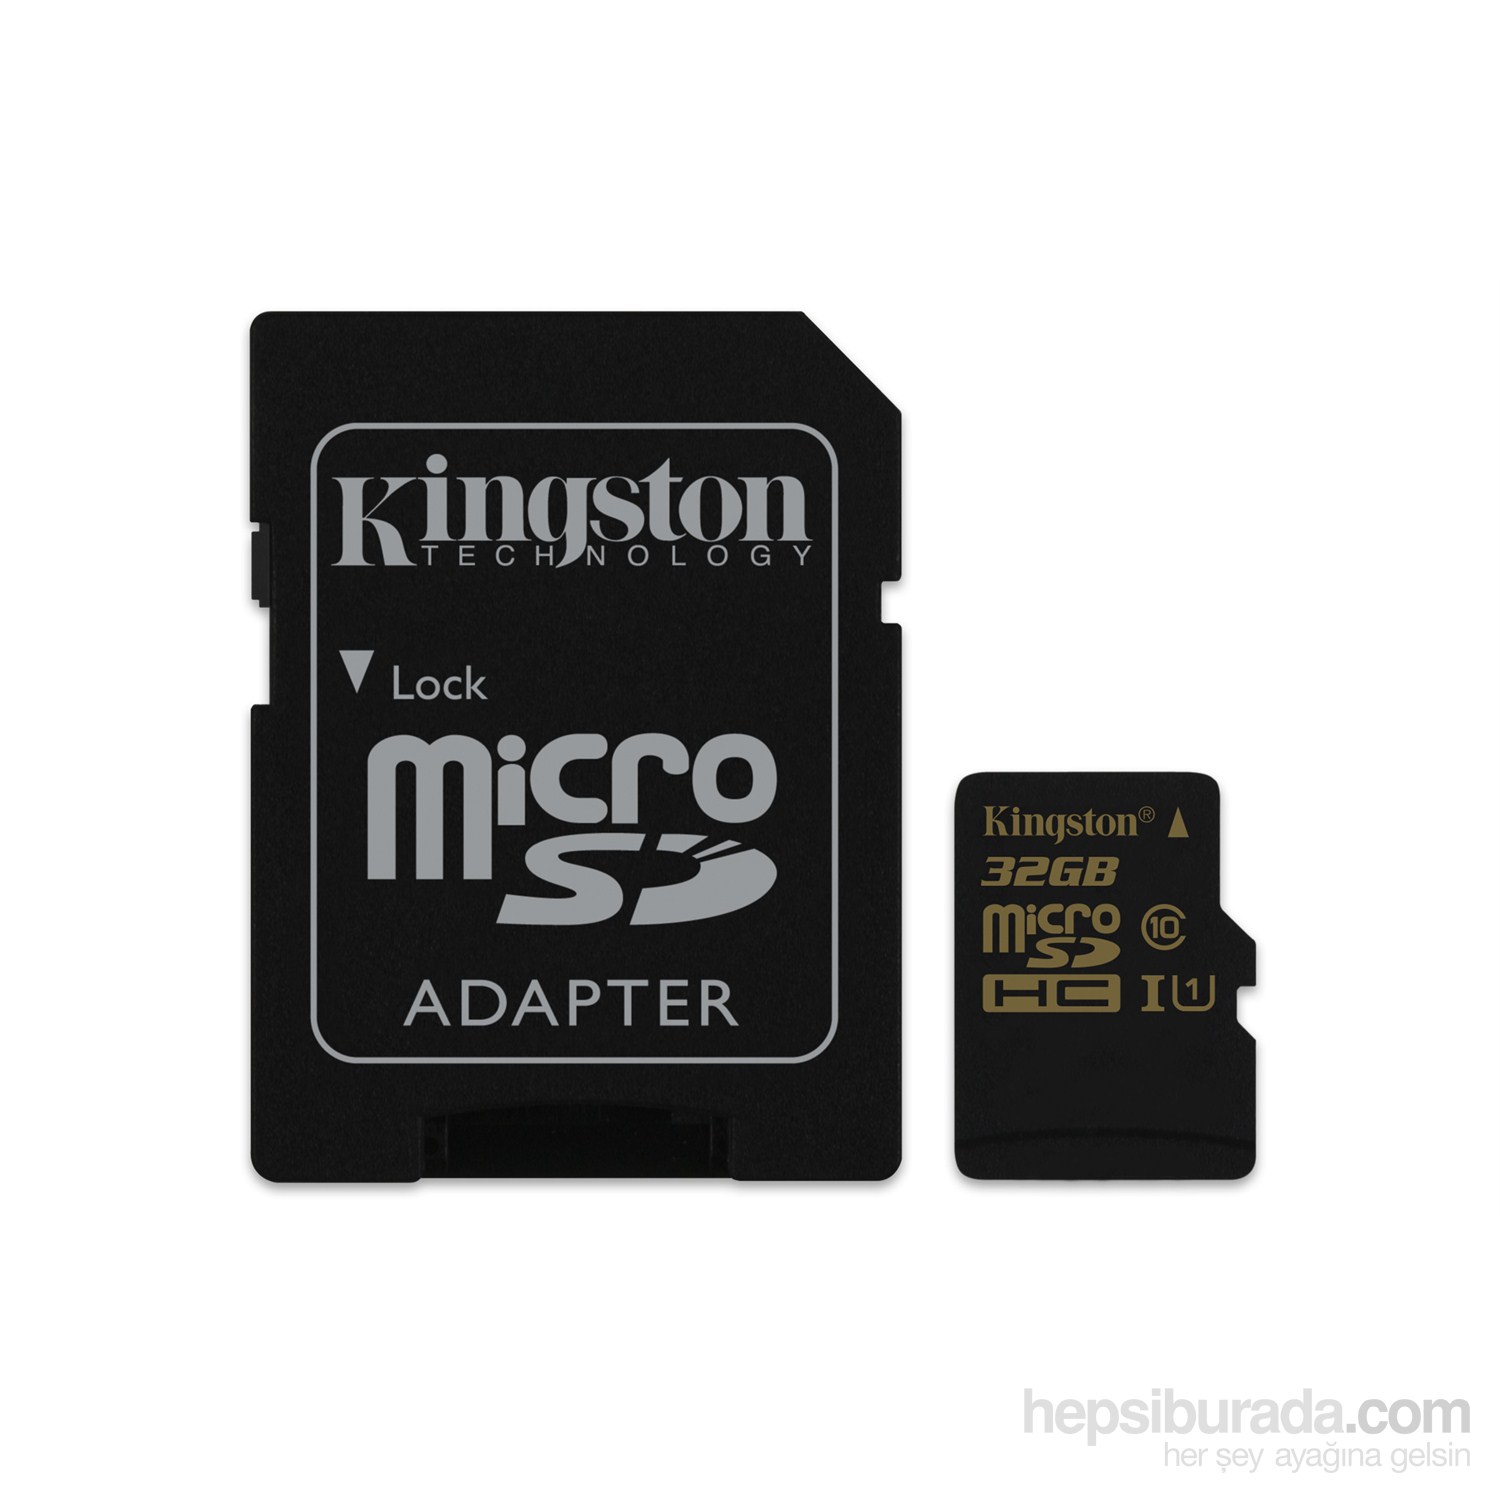 Kingston 32GB MicroSDHC Class 10 UHS-I Hafıza Kartı SDCA10/32GB